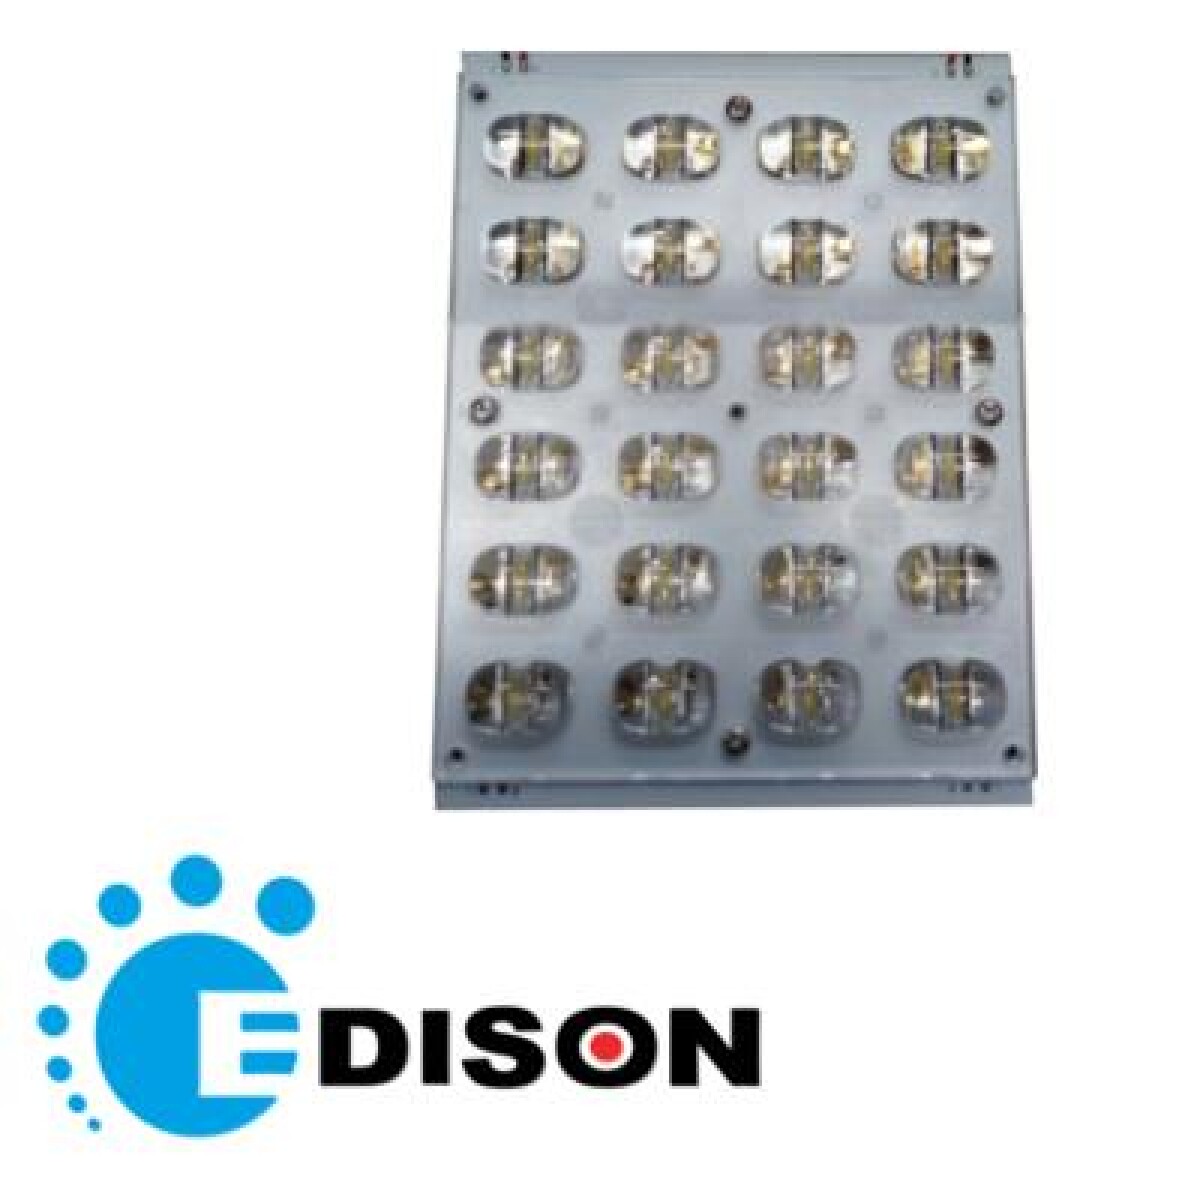 Edison - EMPH-C61J09G-241U - Panel Led - Emph C61J - Módulo de Luz para Alumbrado Publico. 24 Led. 2 - 001 